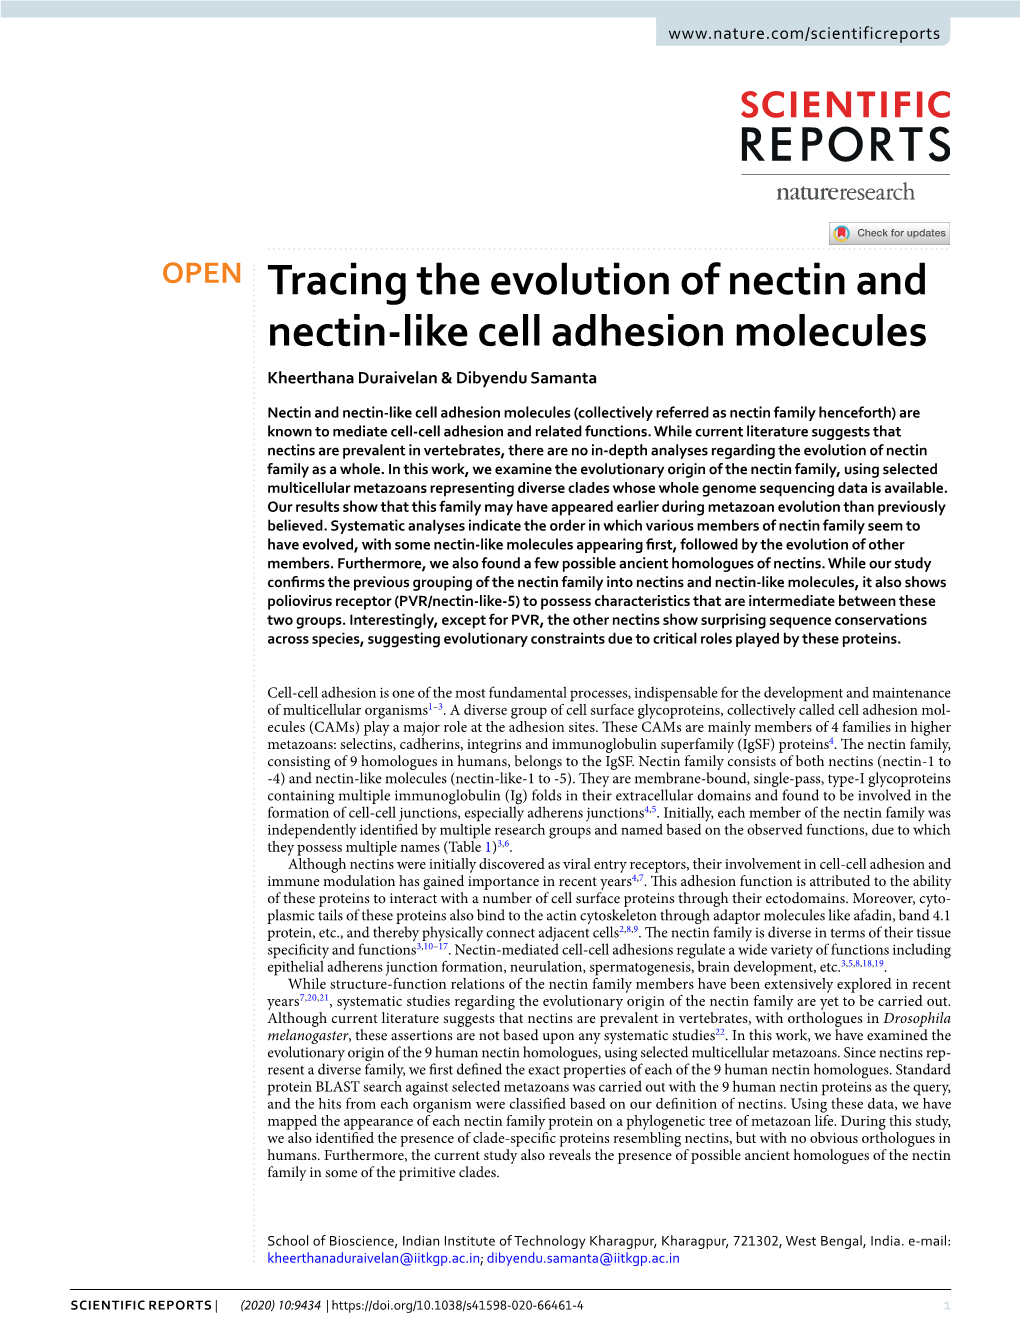 Tracing the Evolution of Nectin and Nectin-Like Cell Adhesion Molecules Kheerthana Duraivelan & Dibyendu Samanta